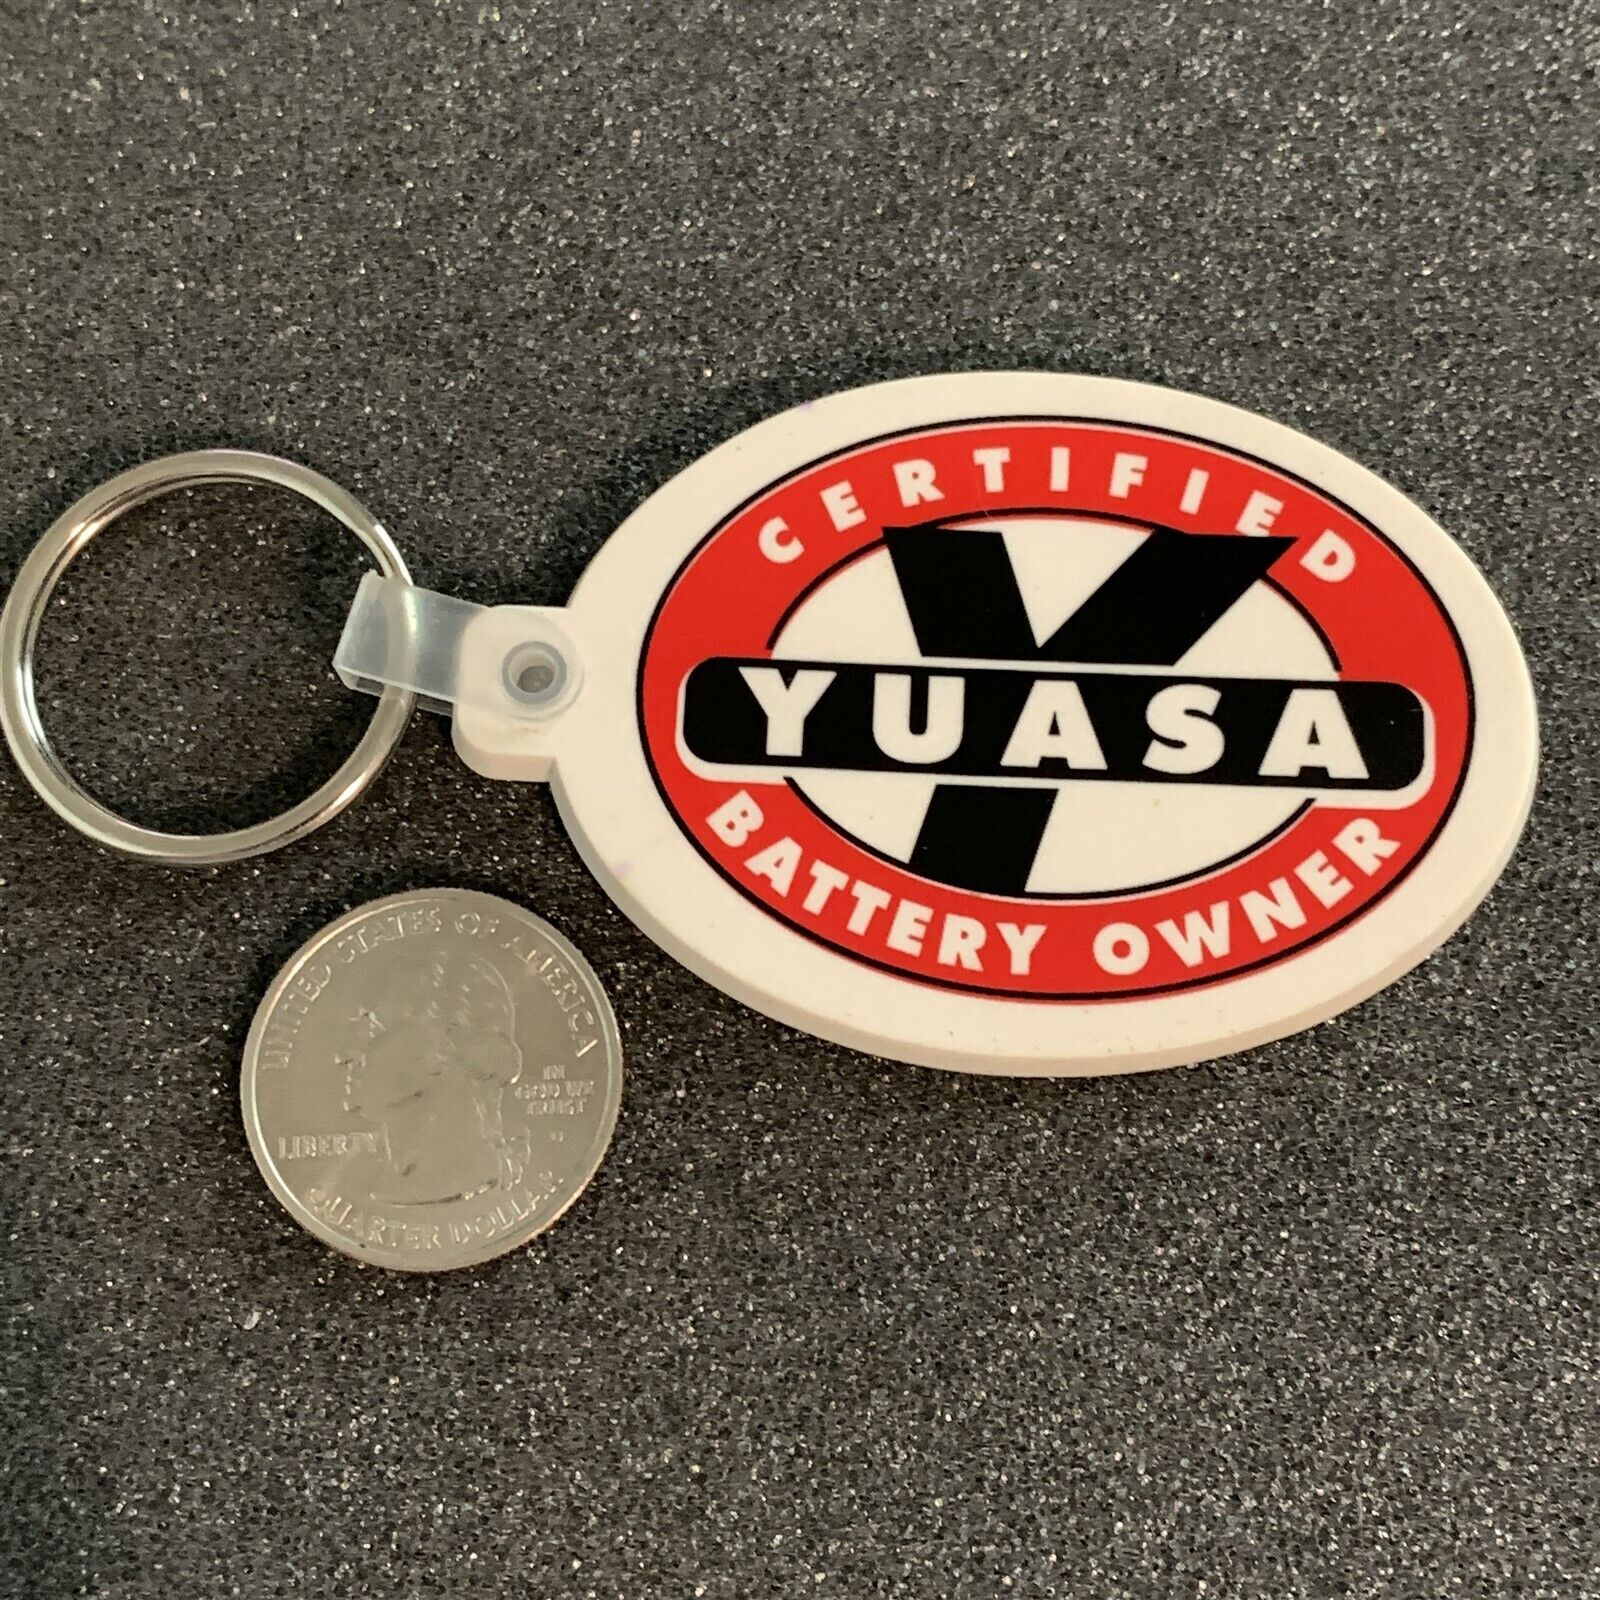 Certified YUASA Battery Owner Promo Keychain Key Ring #41471